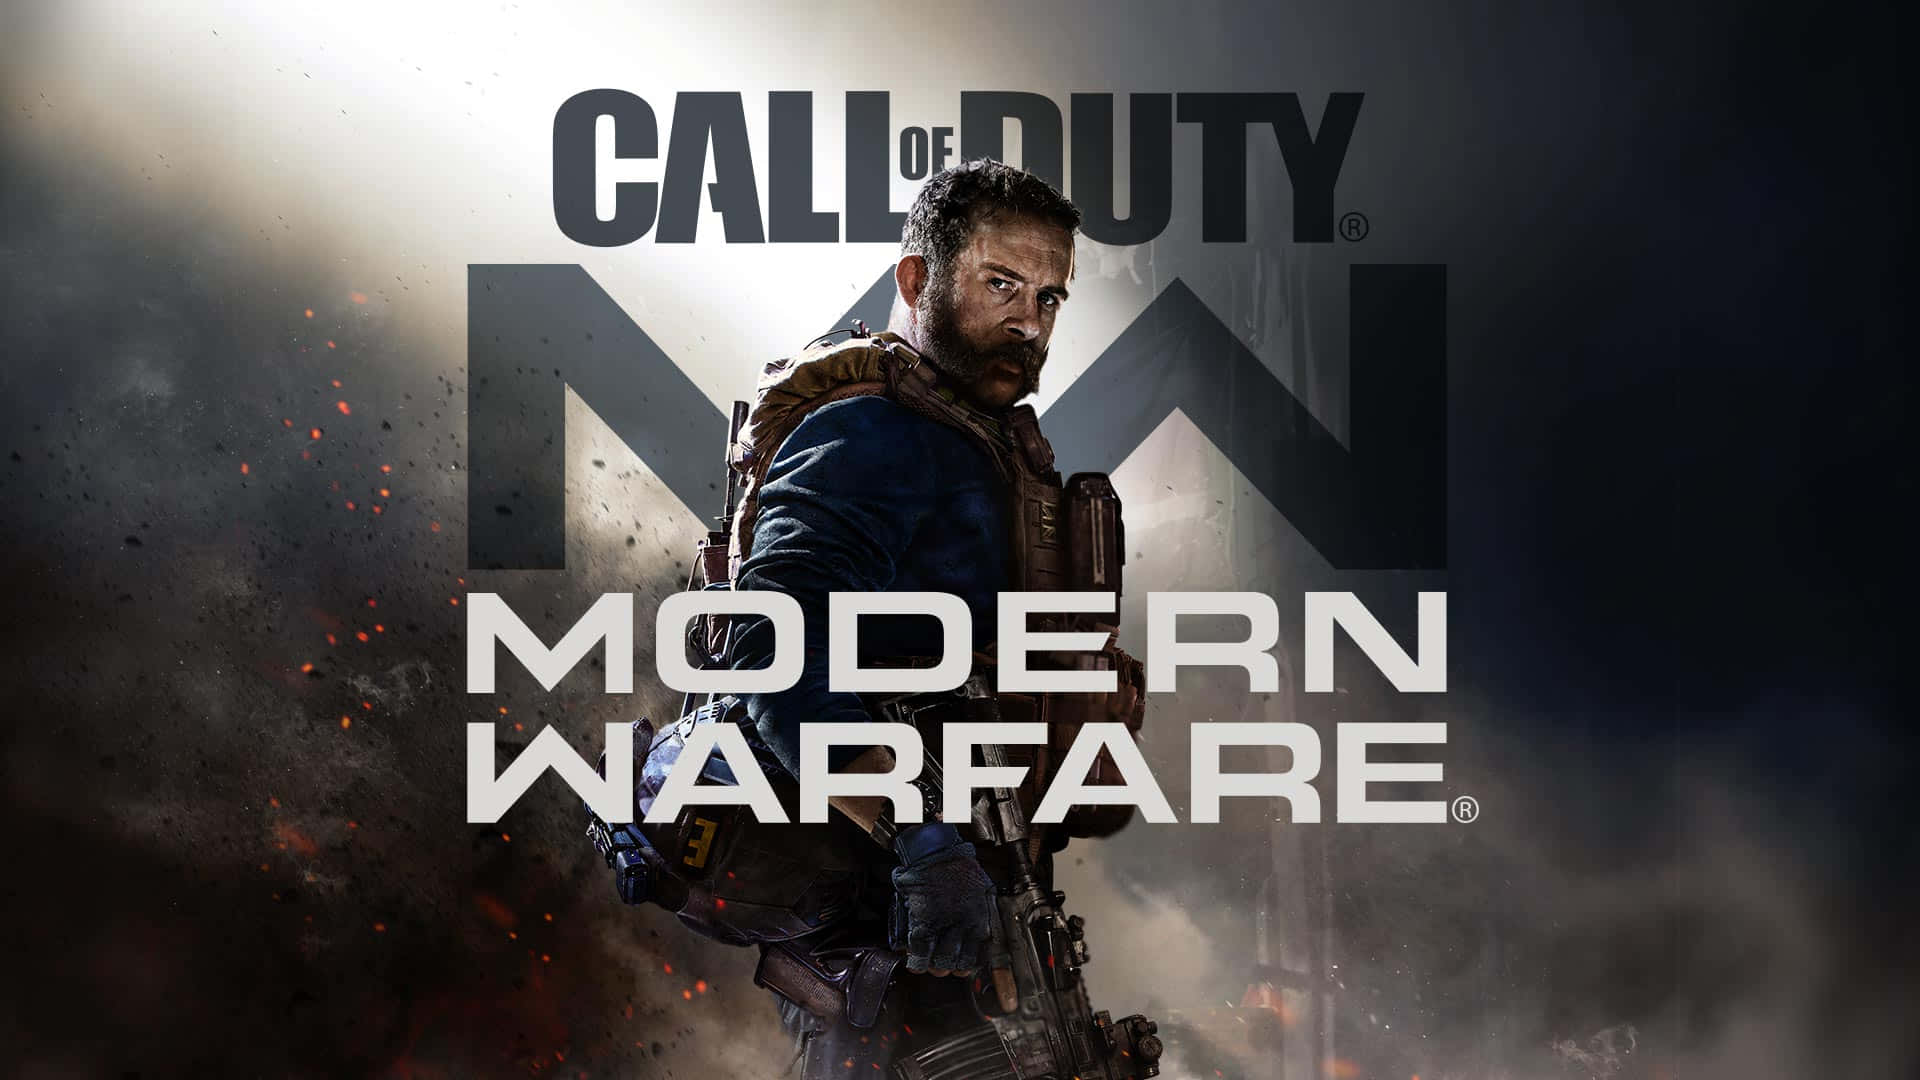 Callof Duty Modern Warfare Game Artwork Wallpaper